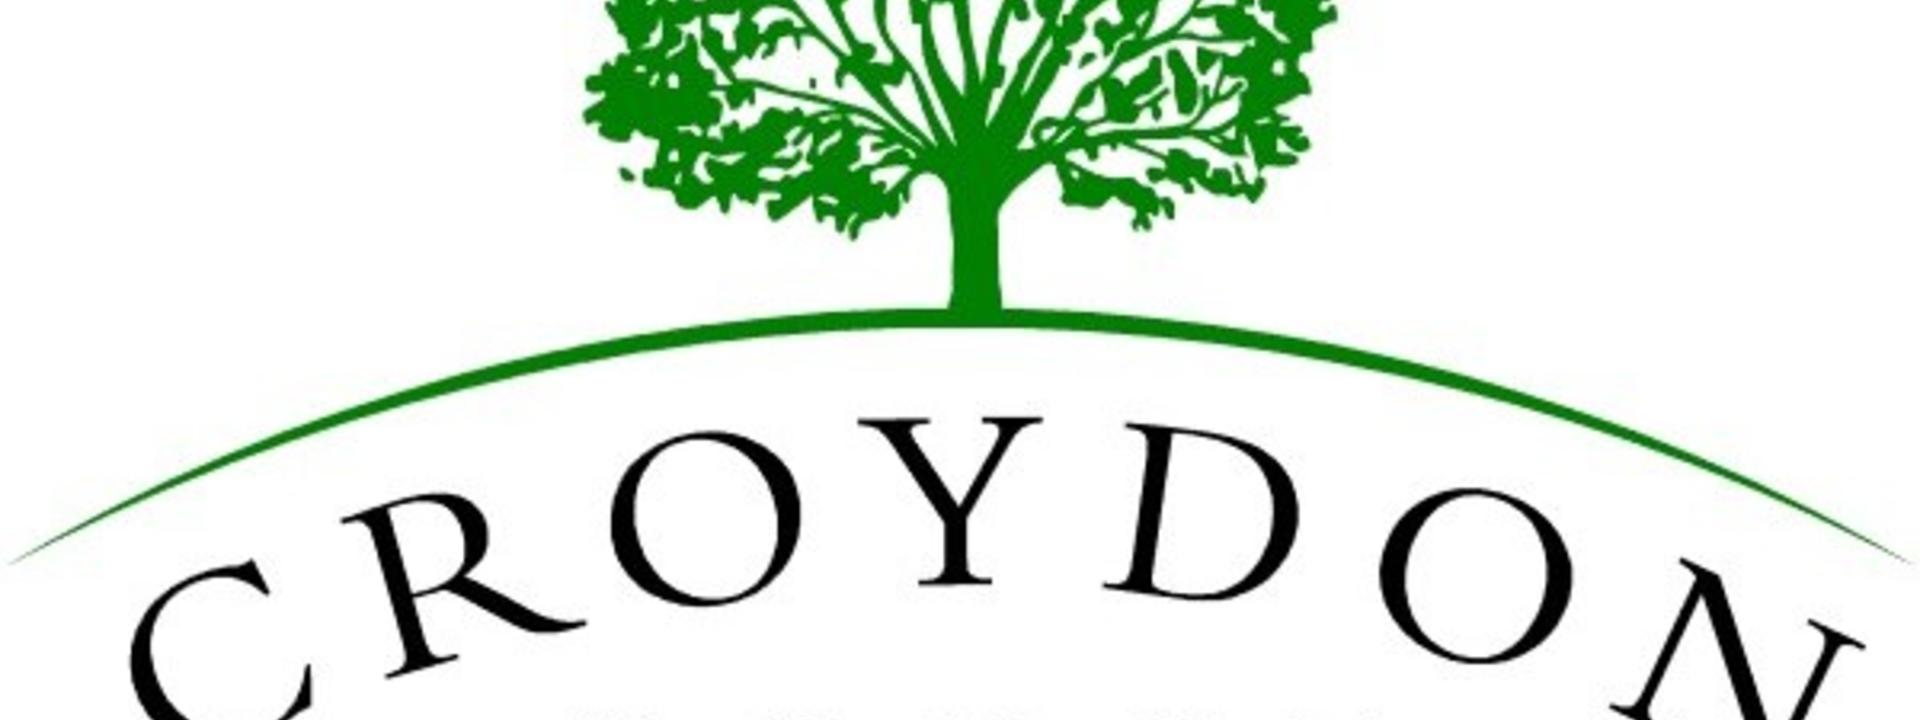 croydon-lodge-med-logo-square.jpg